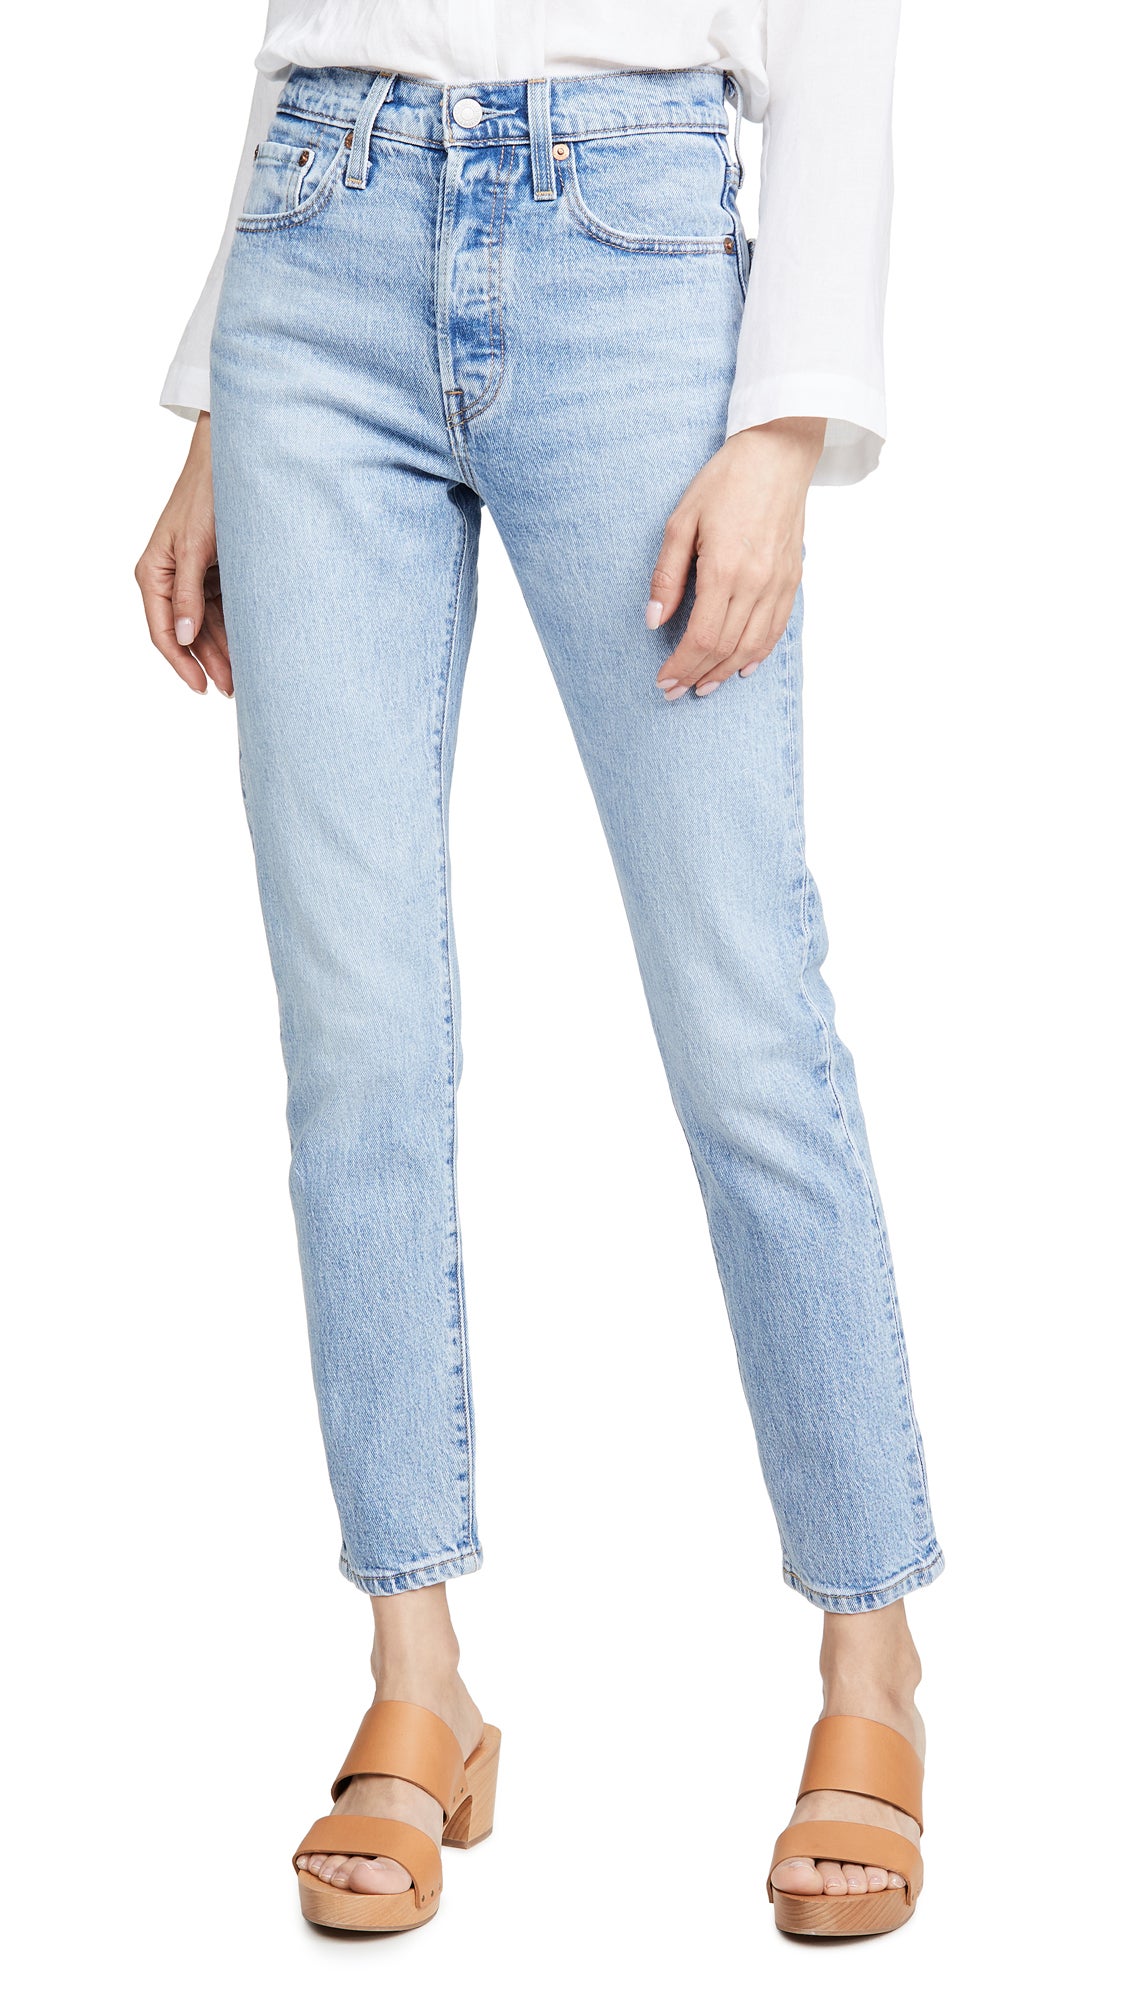 Levi's 501 Skinny Jeans